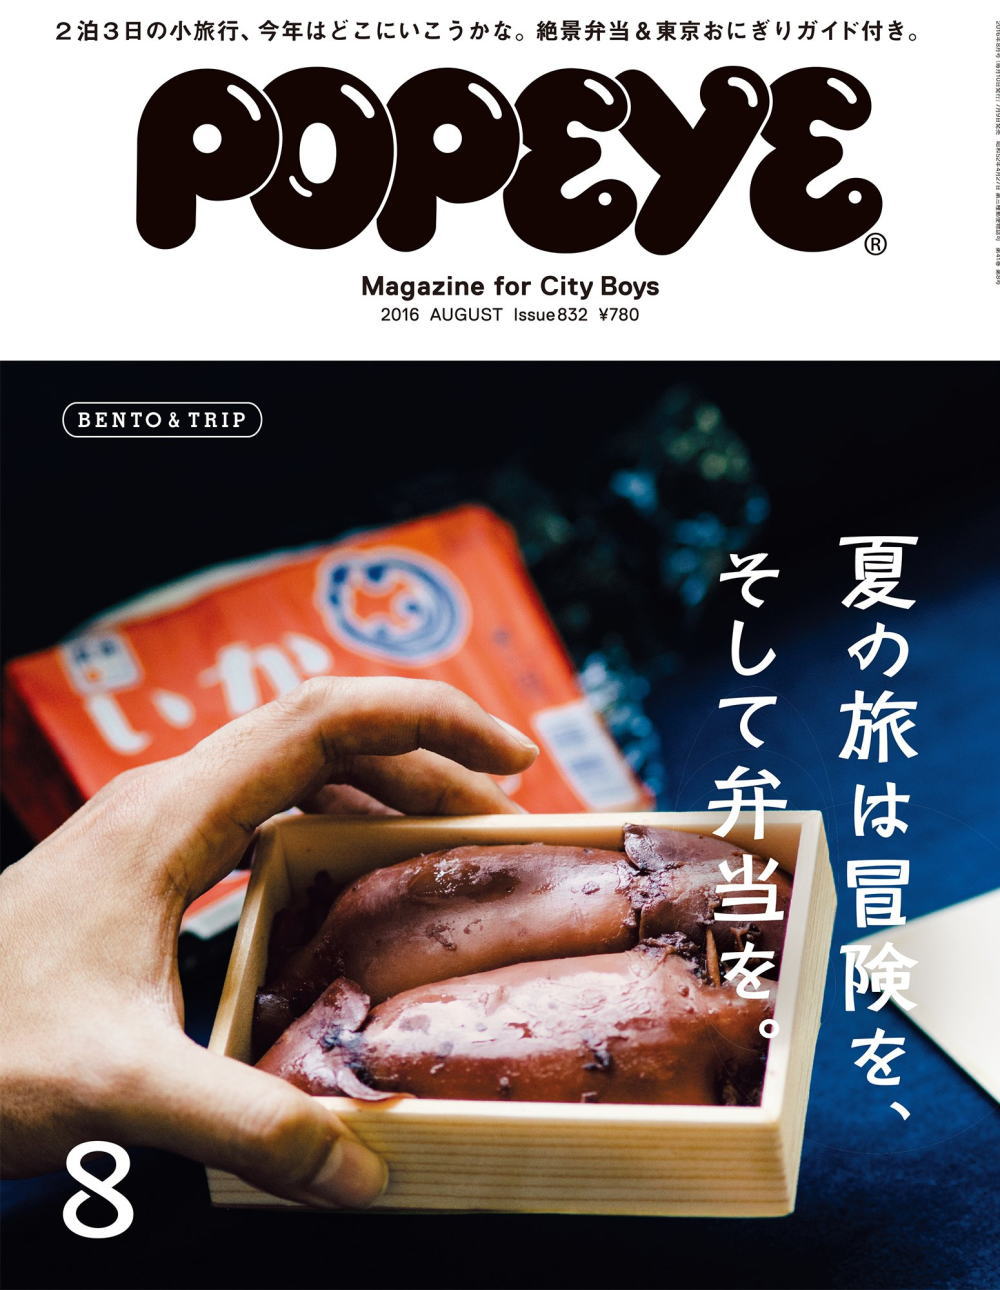 Popeye ファッション雑誌に 仁淀川カヌー が紹介されました 高知仁淀川ラフティング カヌー リバークルーズ